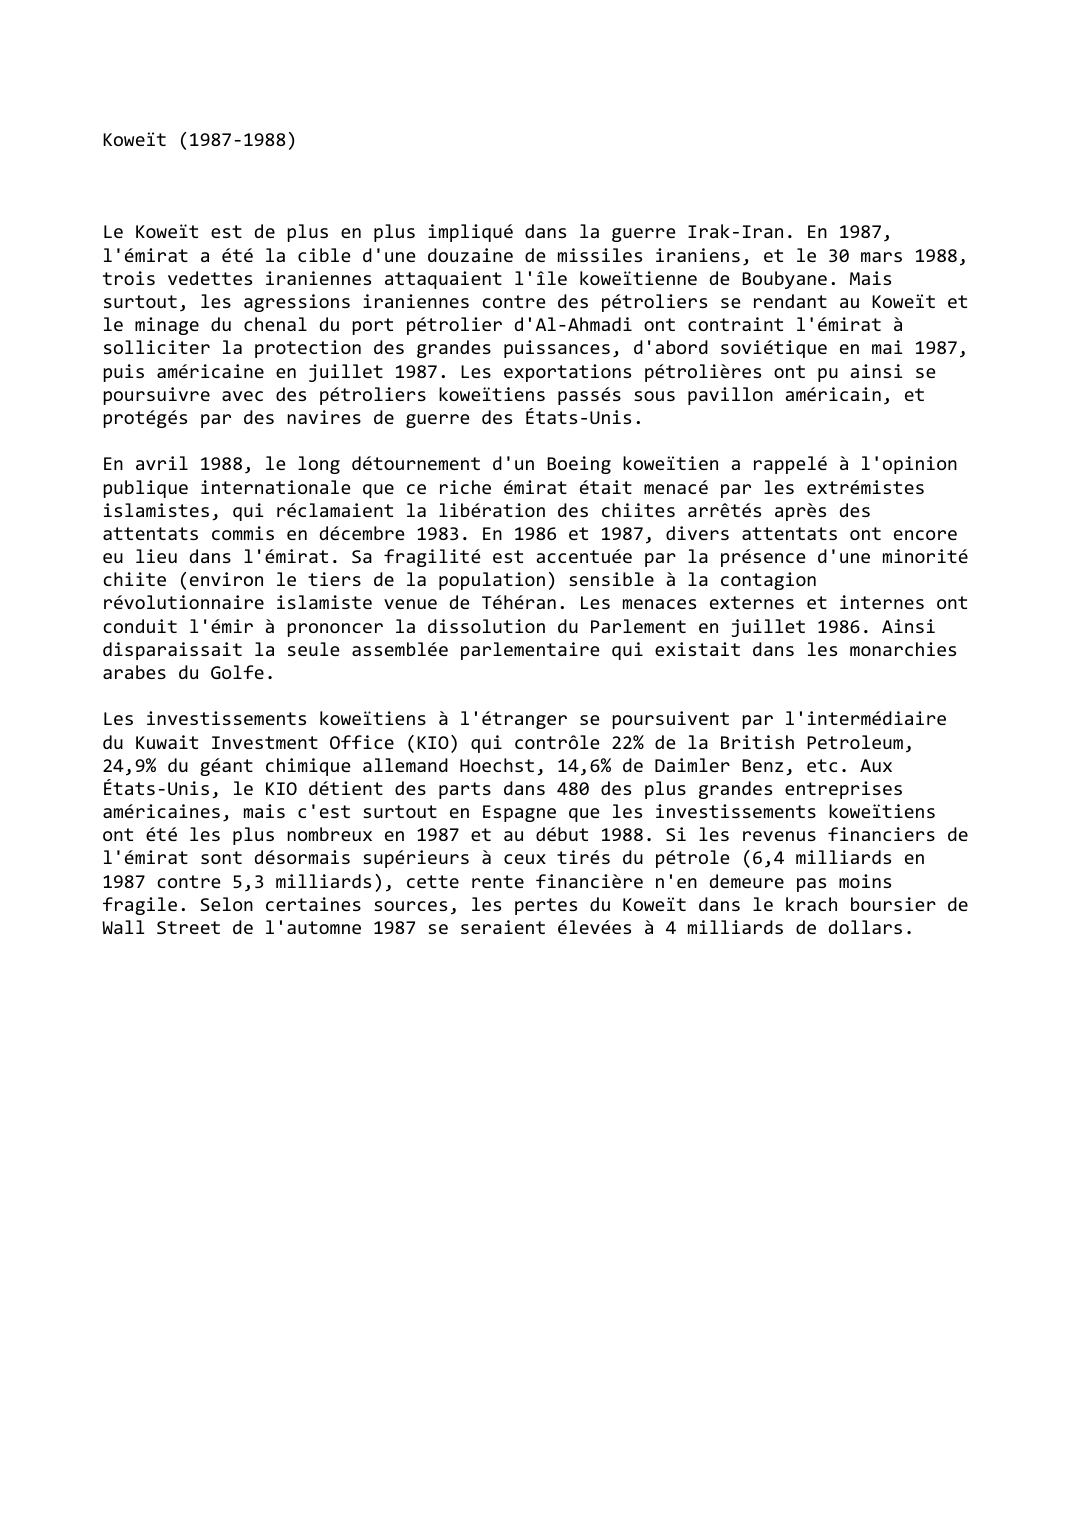 Prévisualisation du document Koweït (1987-1988)